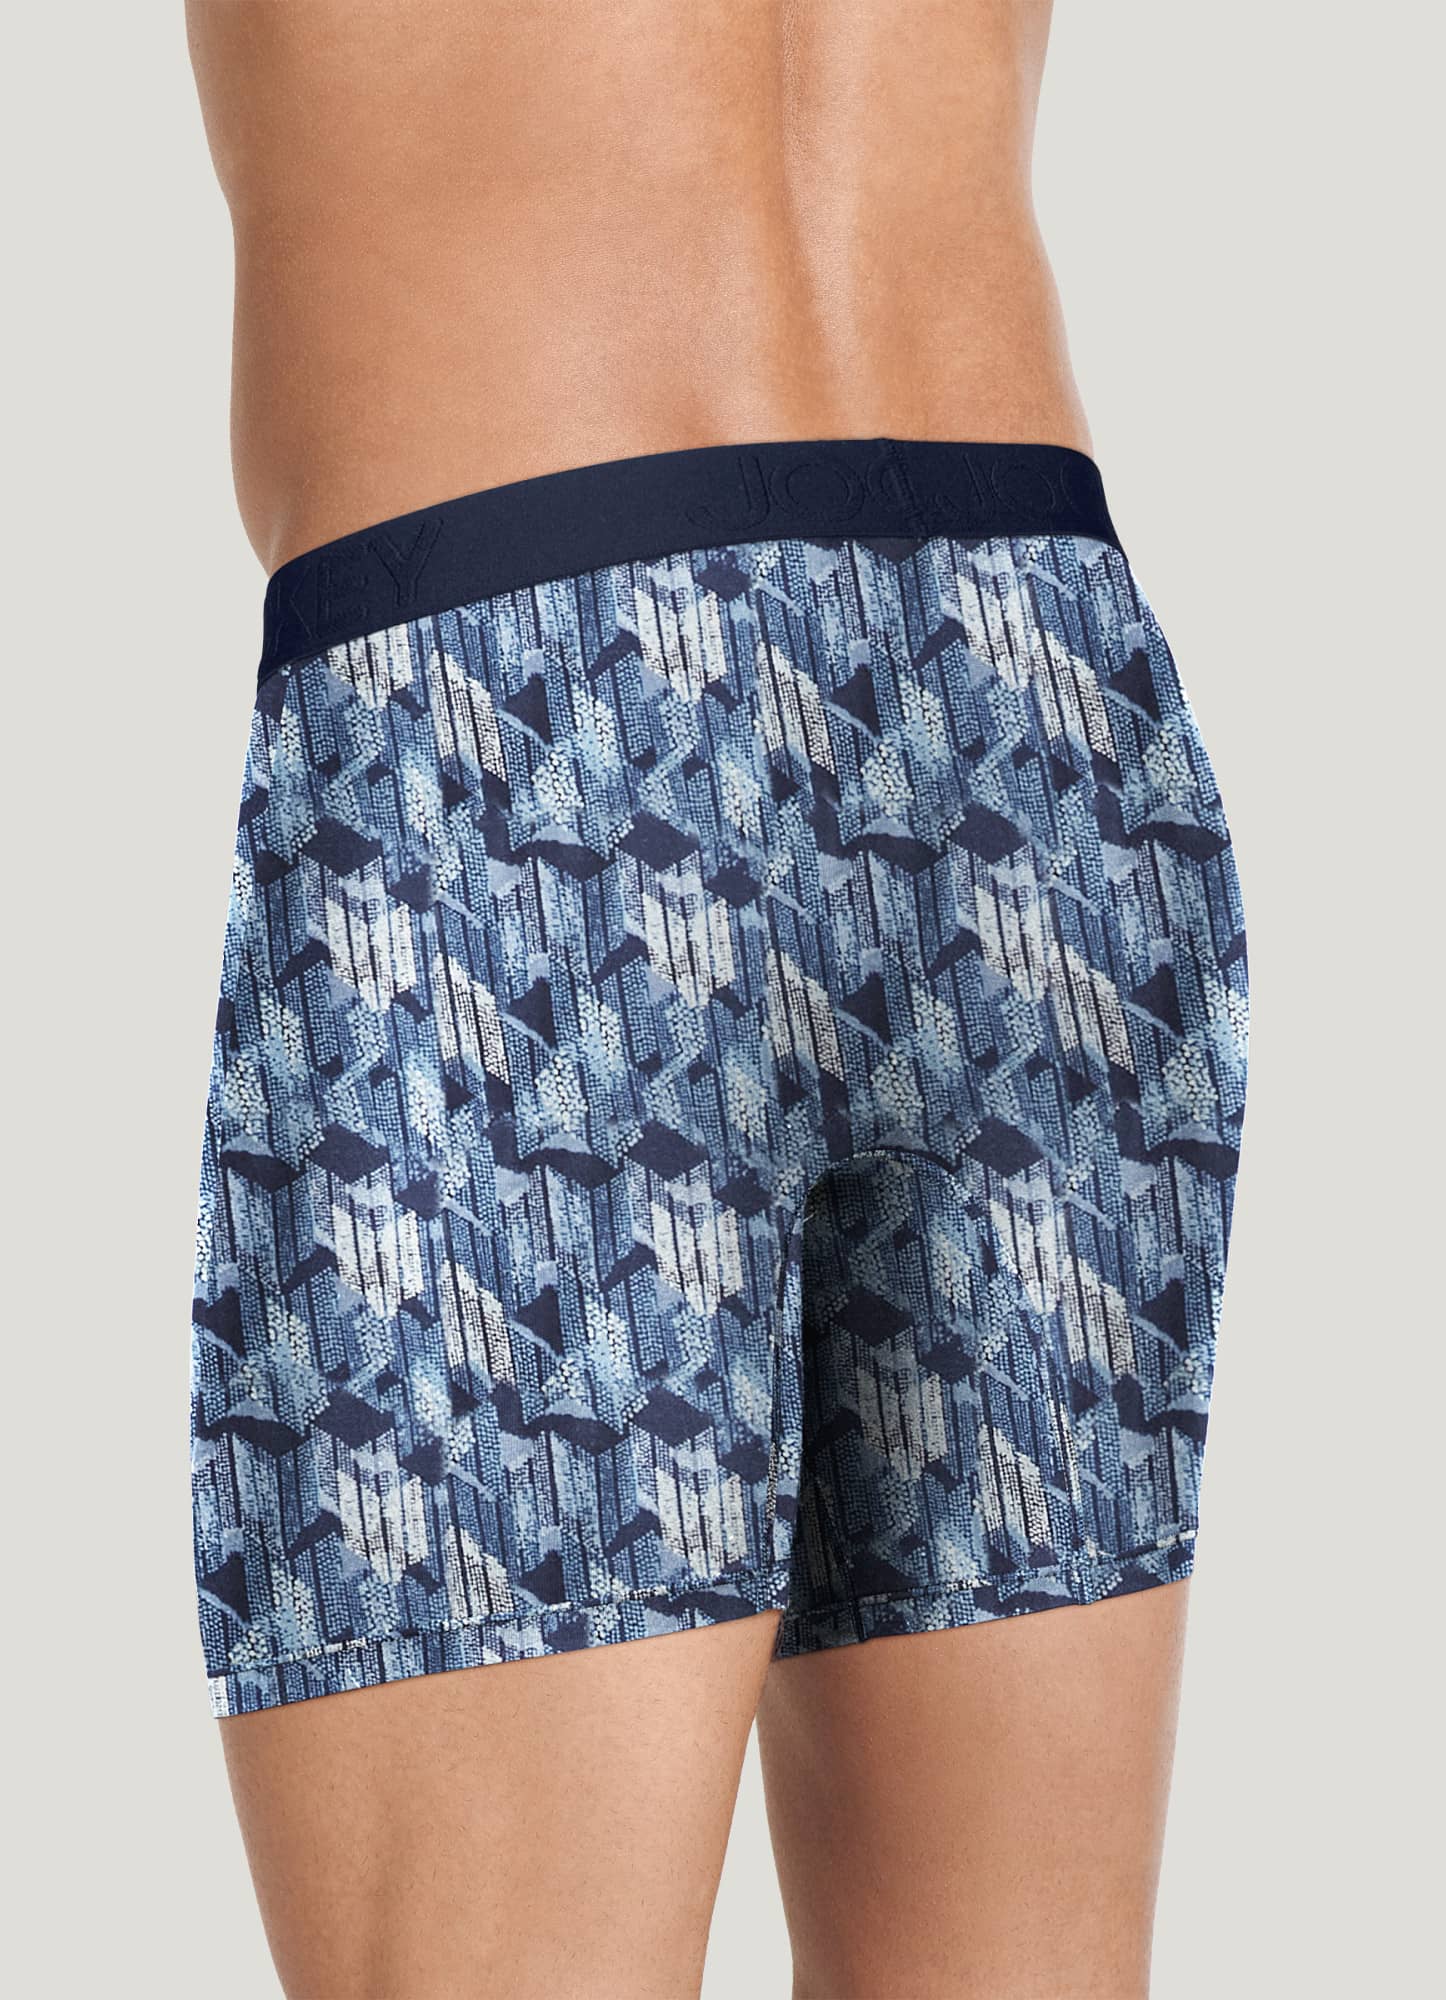 Modal Lite Extra Soft Boxer Cut Men's Underwear (2-pack) – More Than Basics